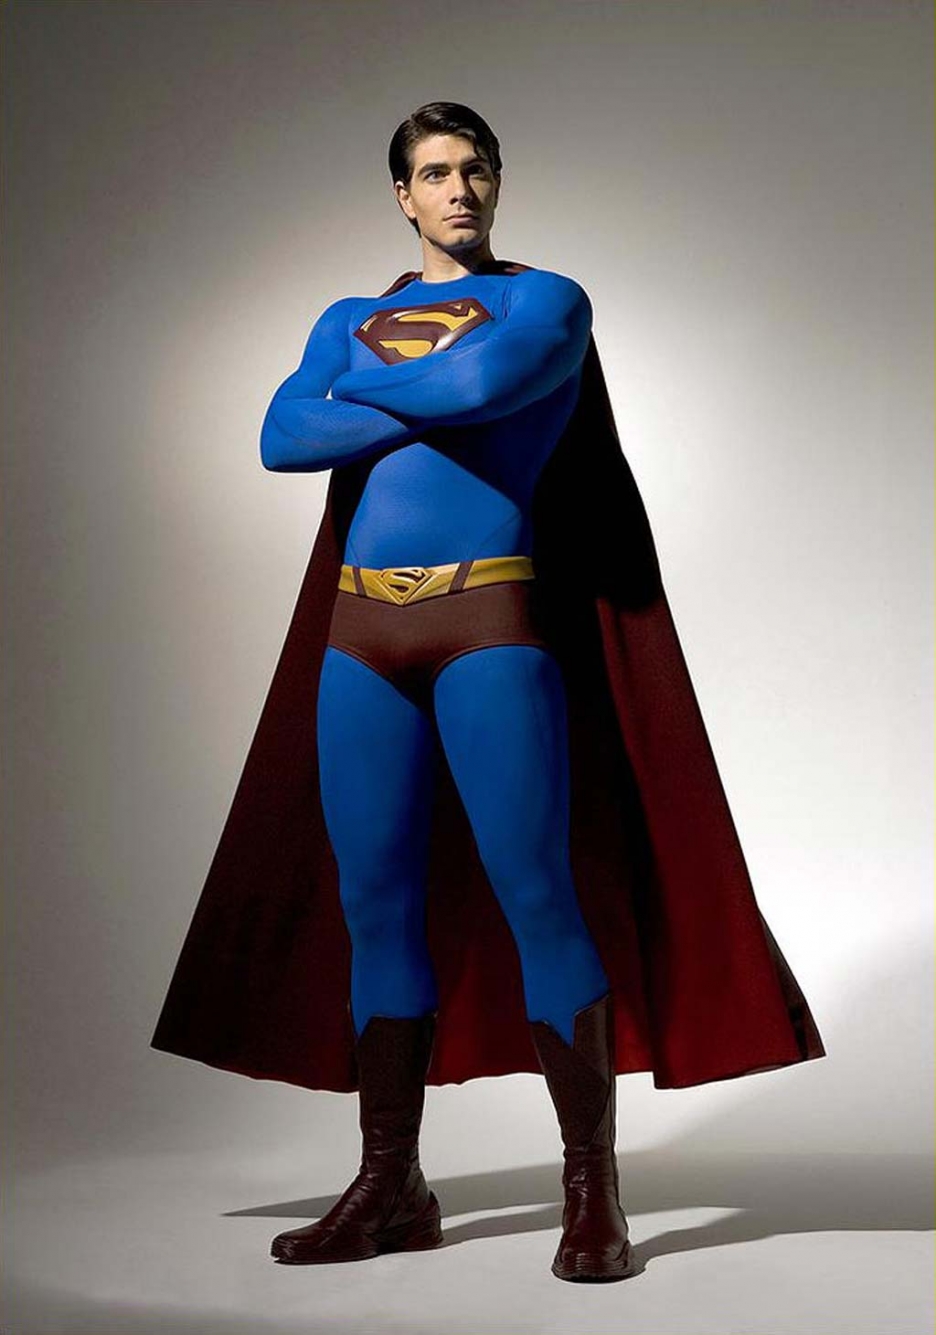 Superman returns. Brandon Routh Супермен. Возвращение Супермена Брэндон рут. Брэндон рут Супермен 2006. Супермен Возвращение 2017.